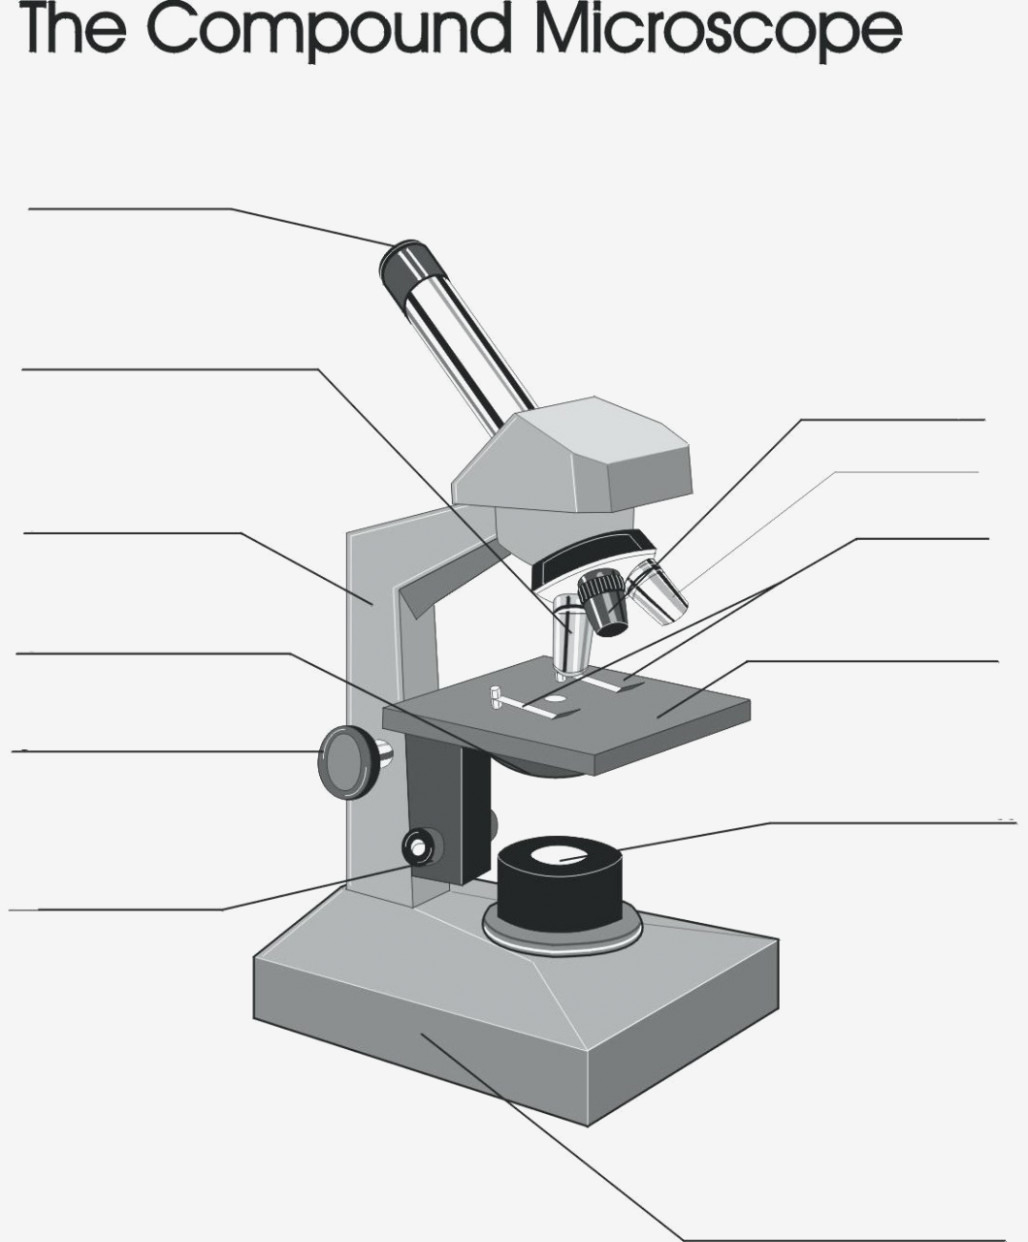 18 Light Labeled Light Microscope